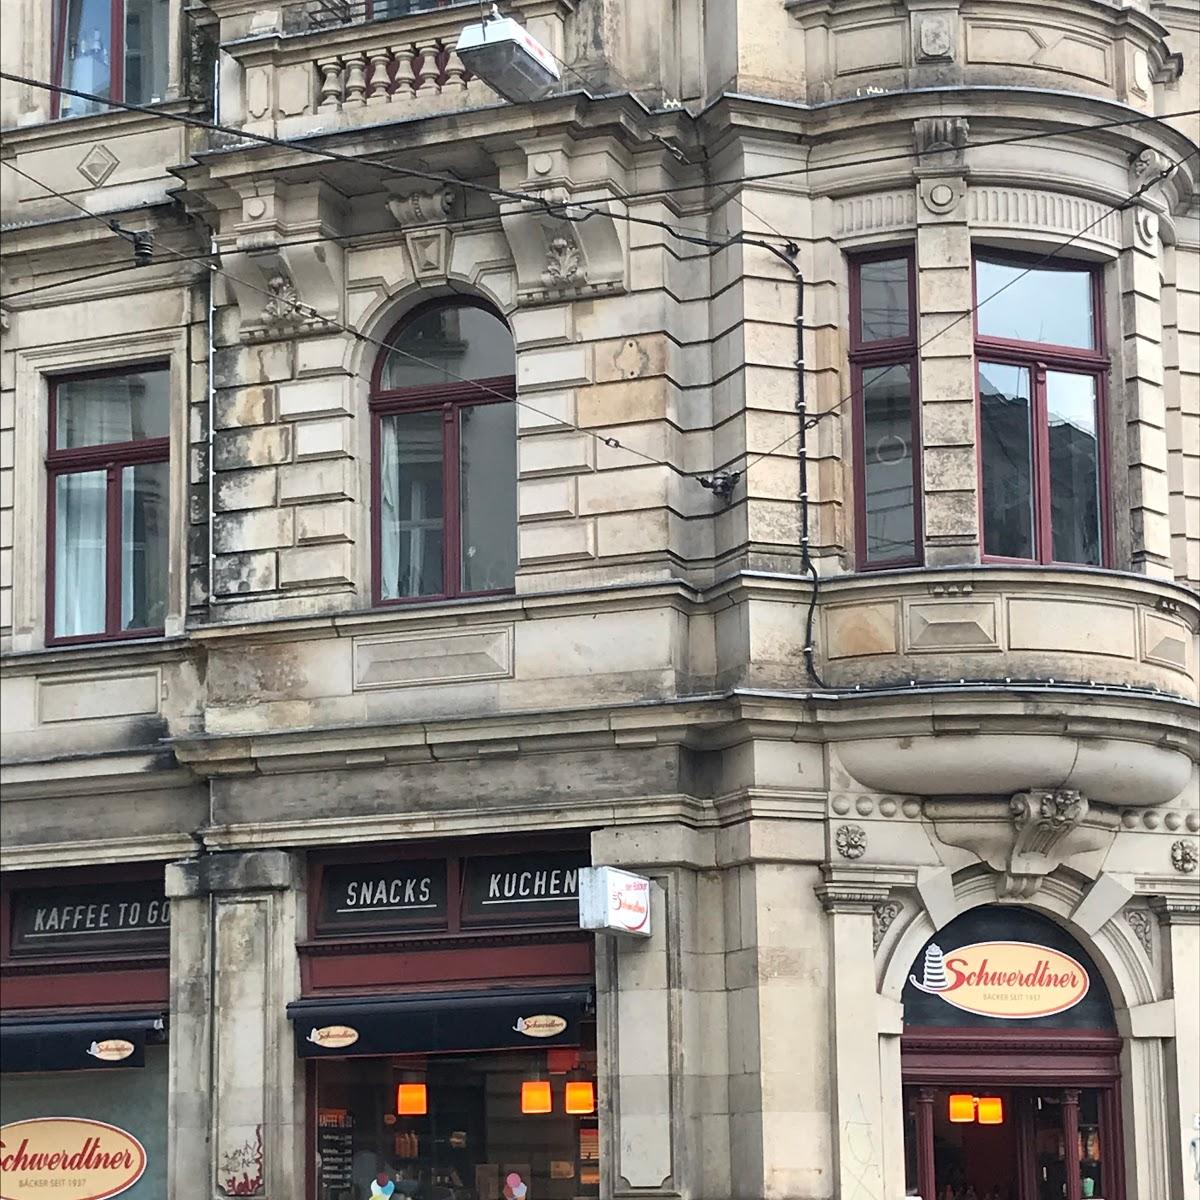 Restaurant "Bäckerei & Konditorei Schwerdtner" in Dresden